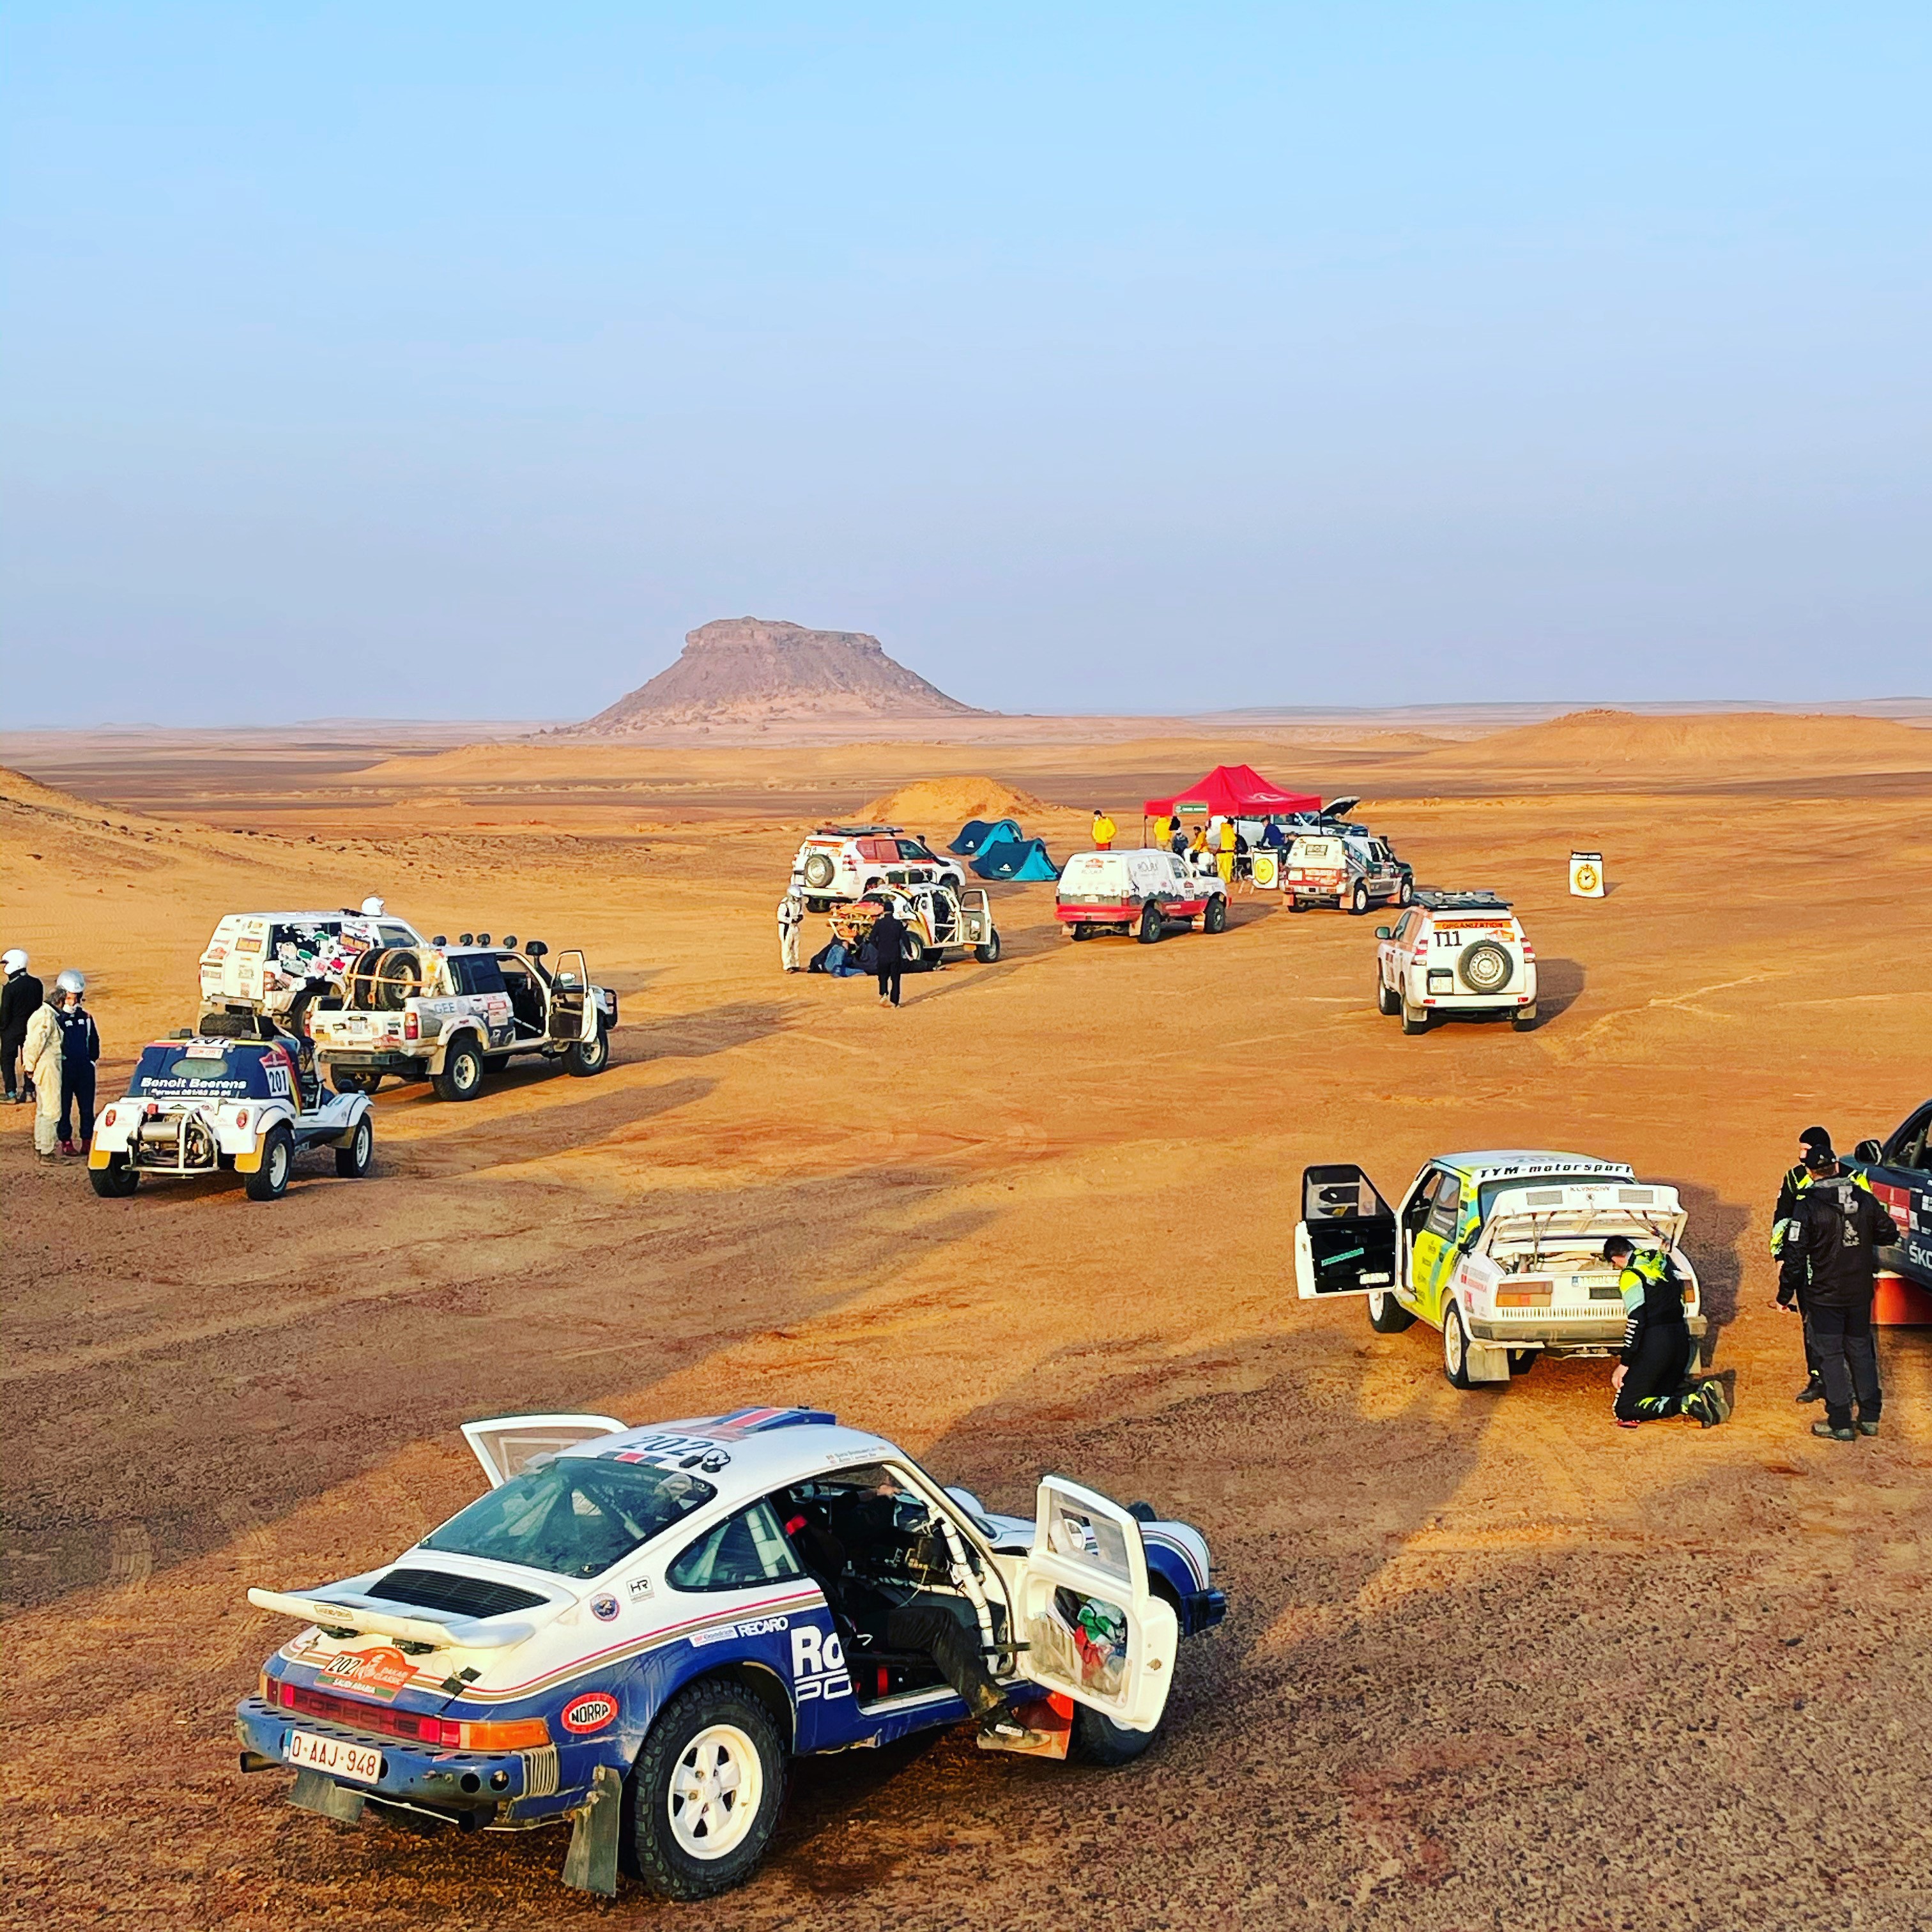 1982 911 SC, Amy Lerner, Dakar Rally, Saudi Arabia, 2021, Photo: Dakar/Fotop